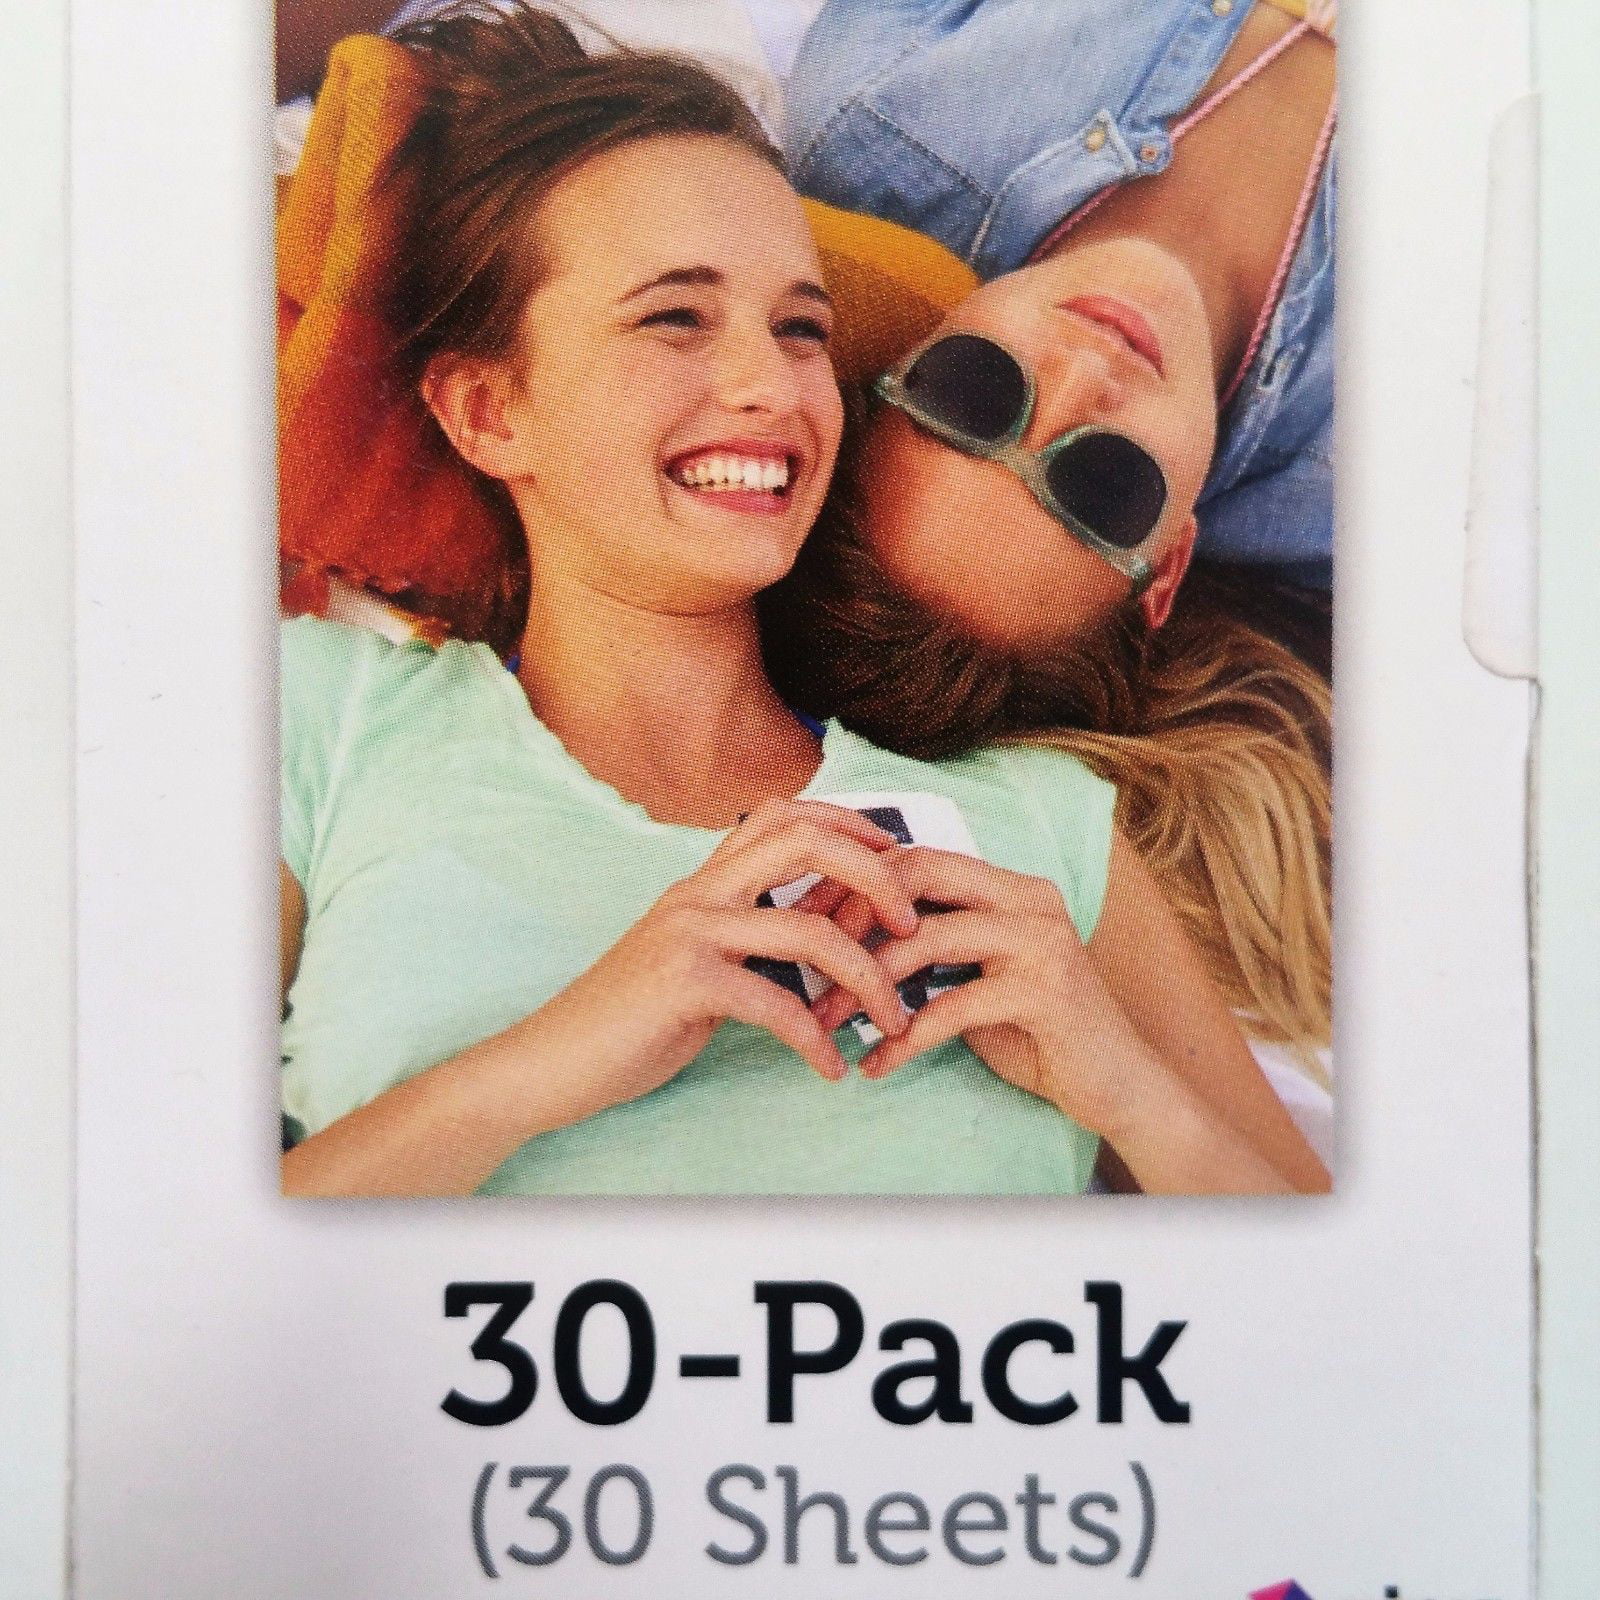 Polaroid 2x3 Zink film 30 pack